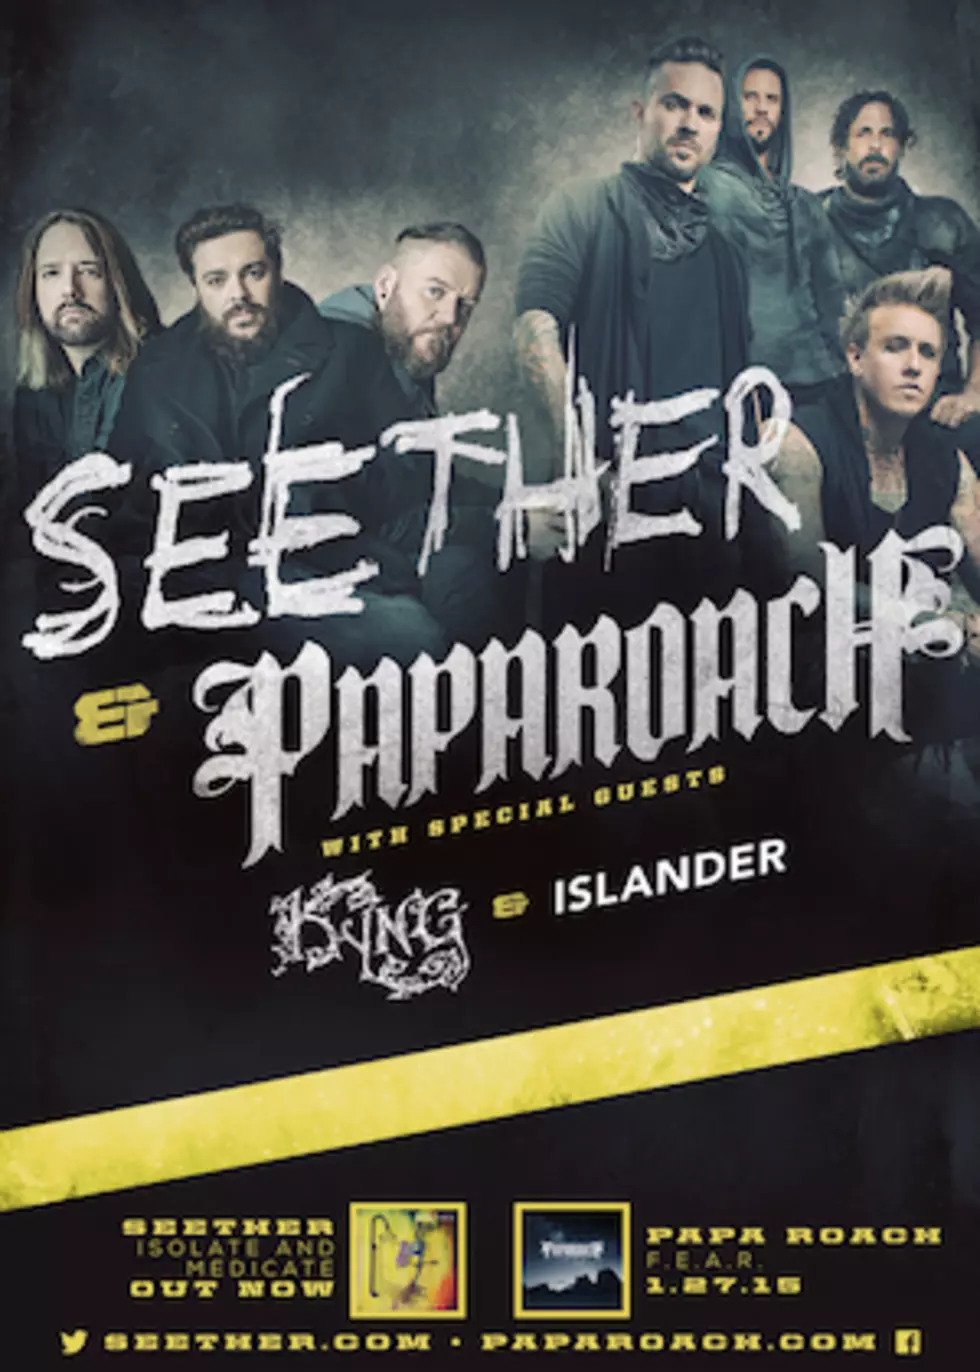 Papa Roach + Seether Announce Co-Headlining 2015 U.S. Tour